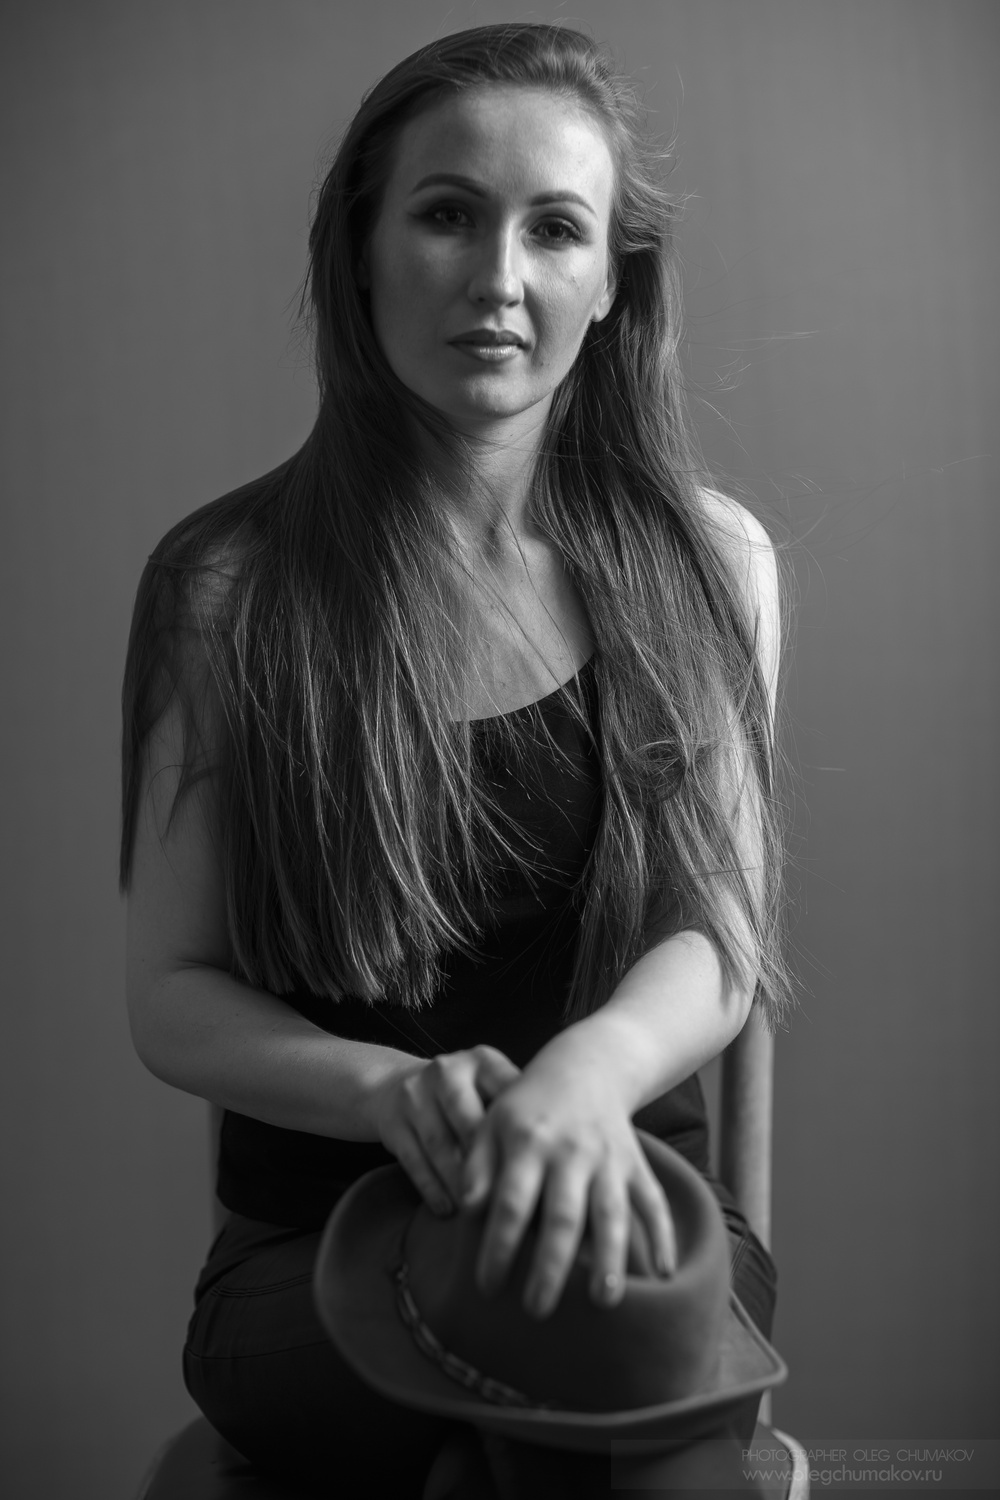 Личный портрет - Визажист Лена Колпакова. 